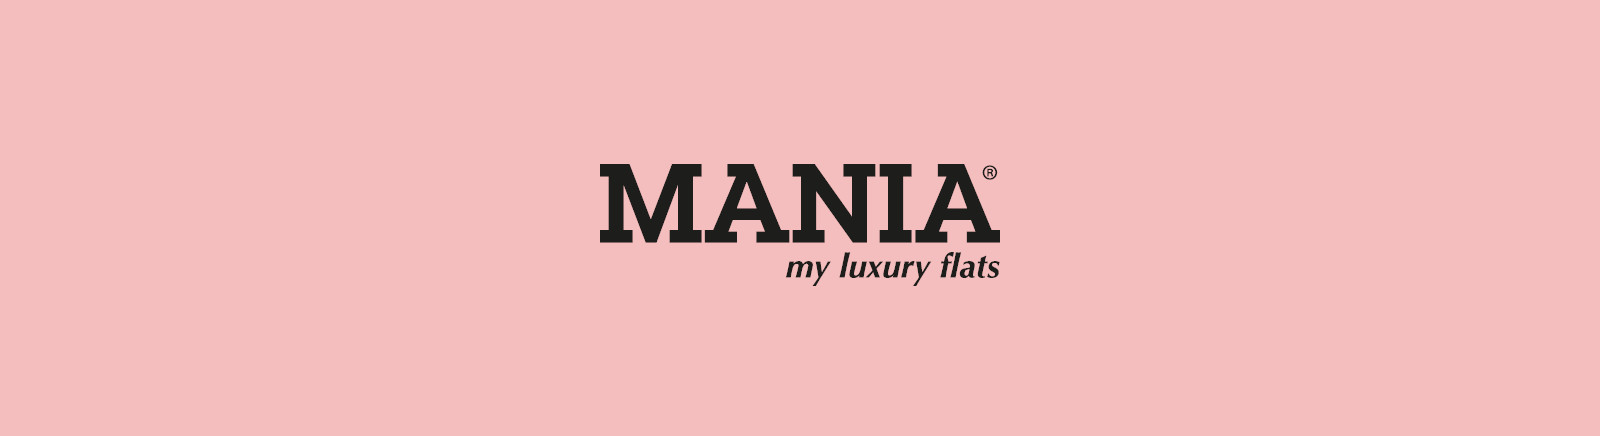 Mania Damenschuhe online kaufen im GISY Schuhe Shop